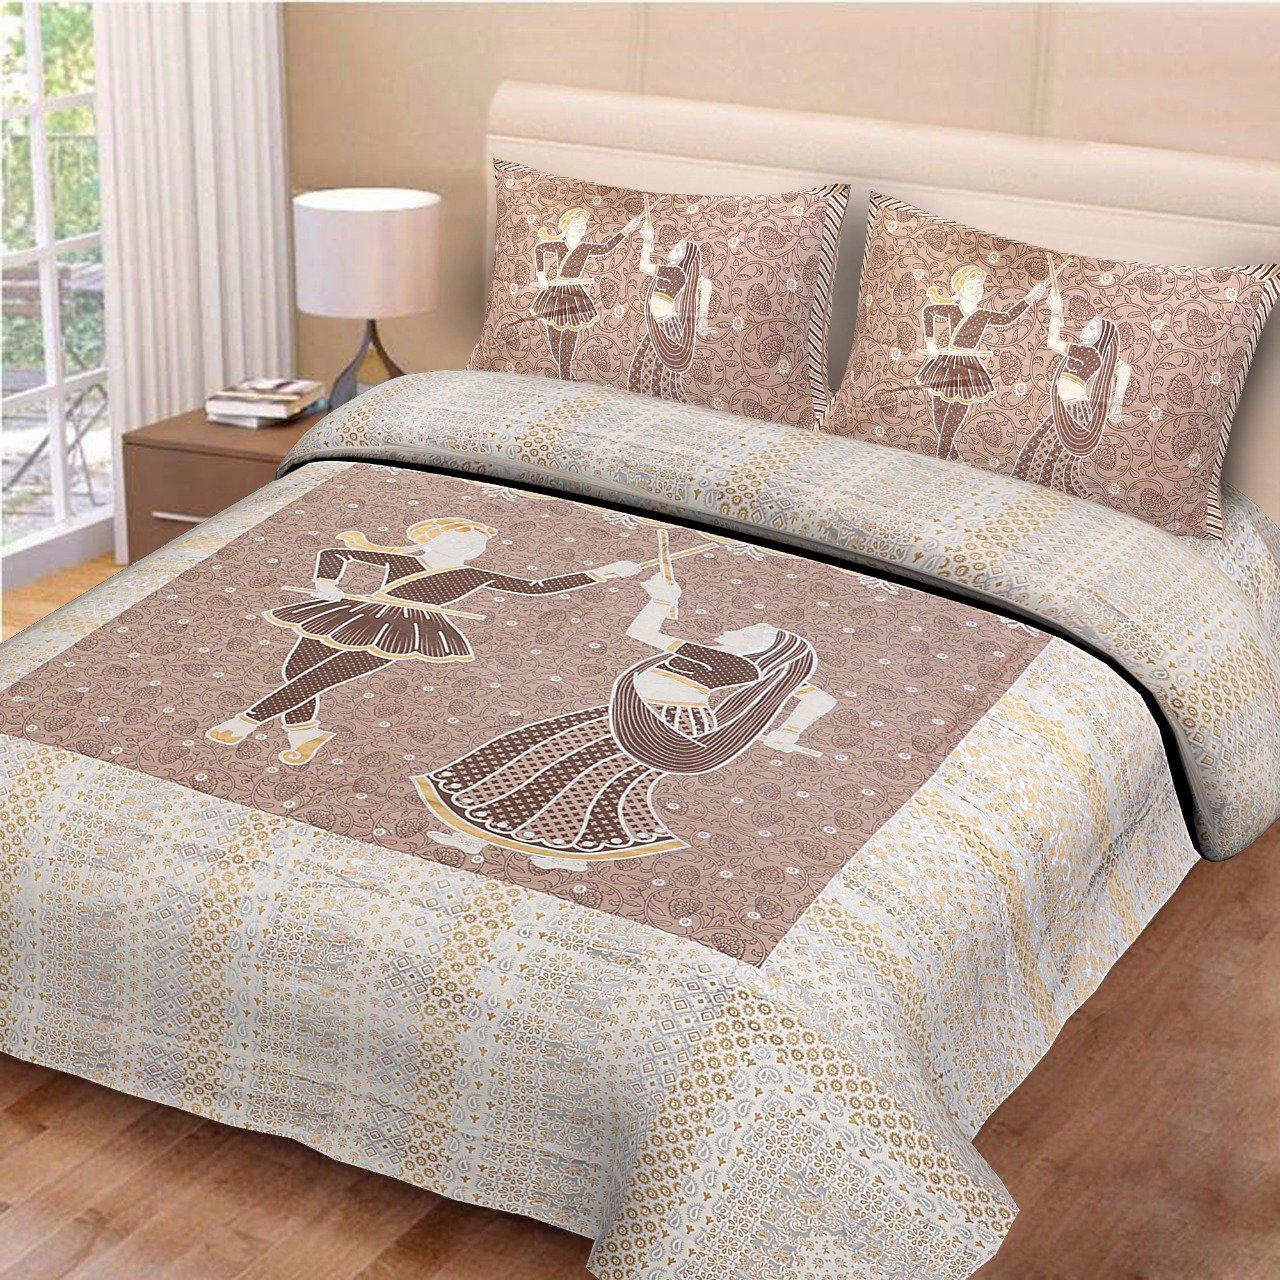 Beautiful Brown Human gold Print King Size Cotton Bed Sheet